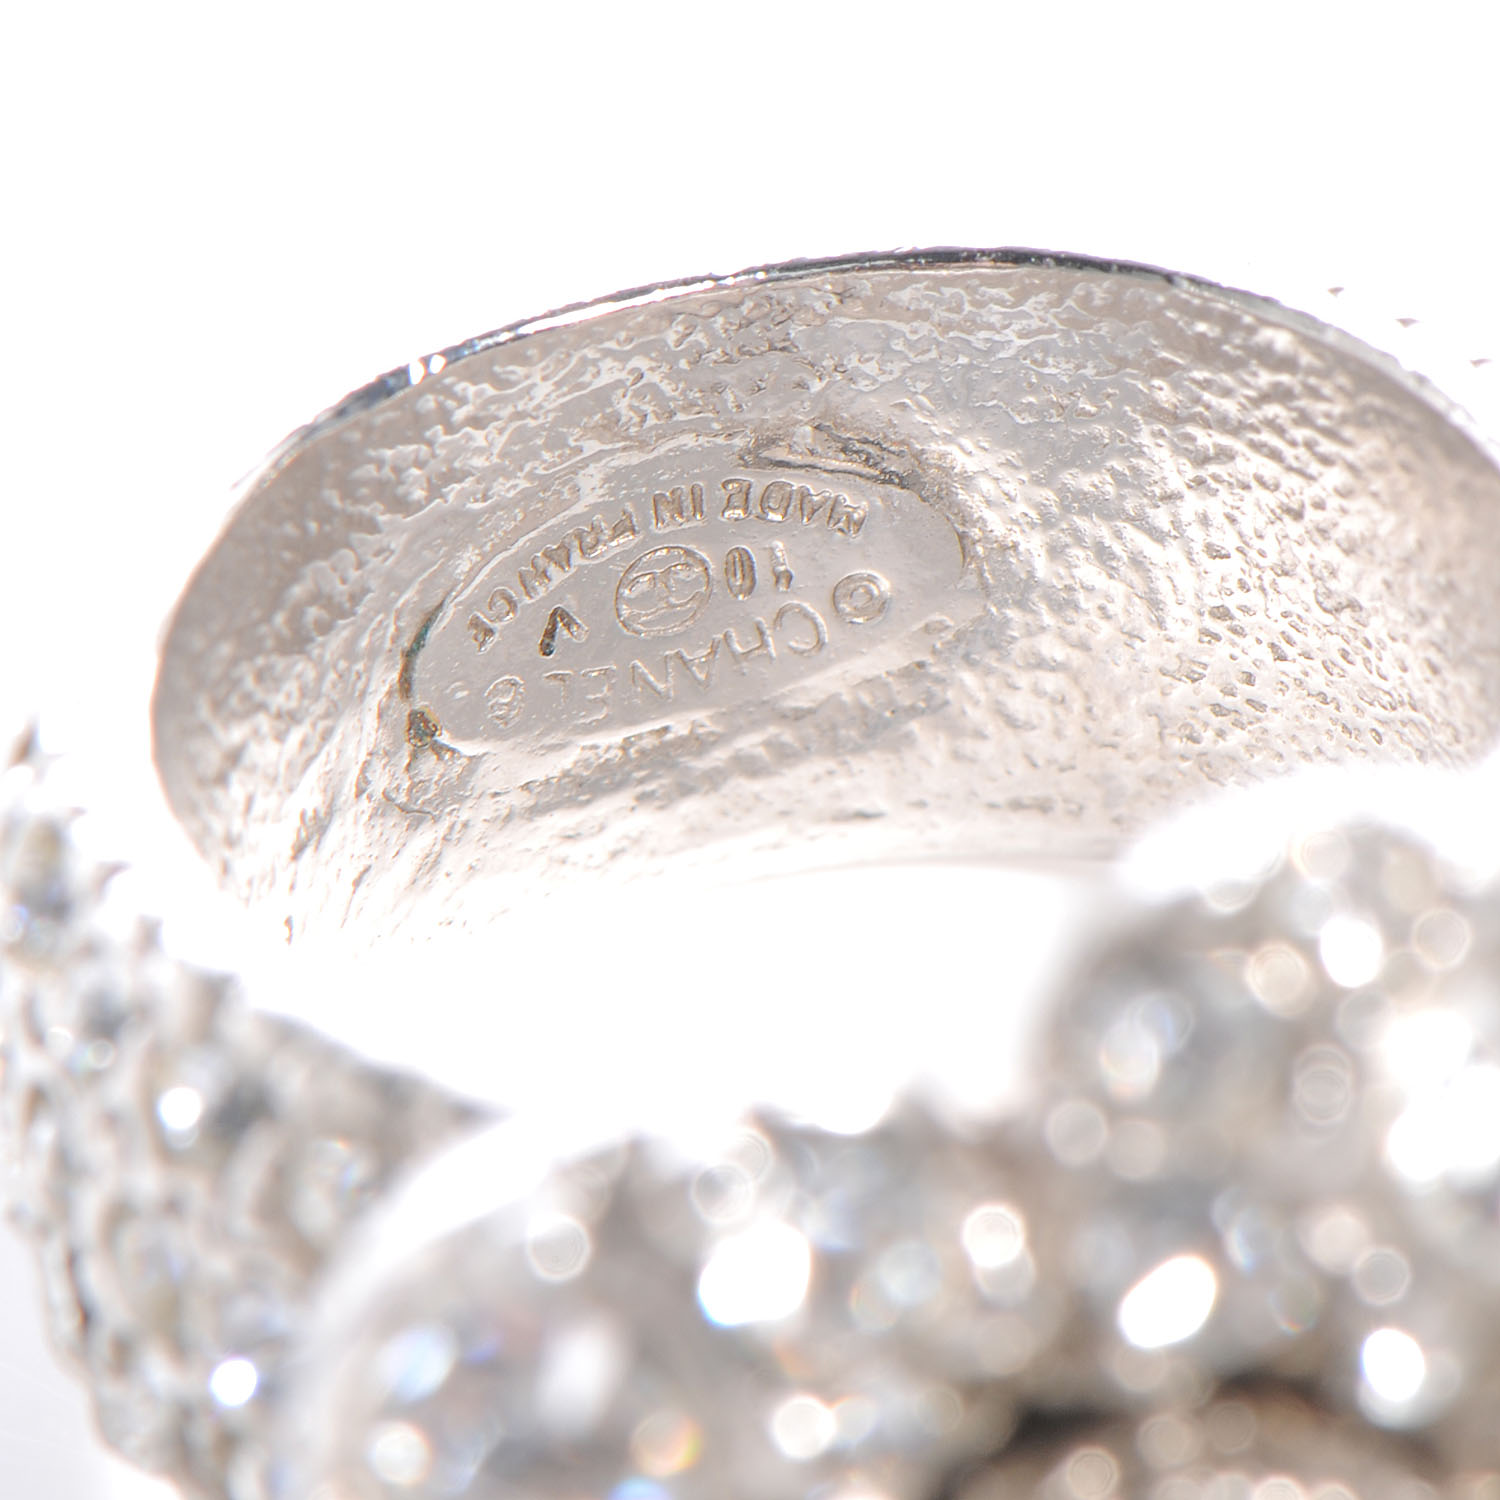 CHANEL Swarovski Crystal Camellia Ring Size 7 56701